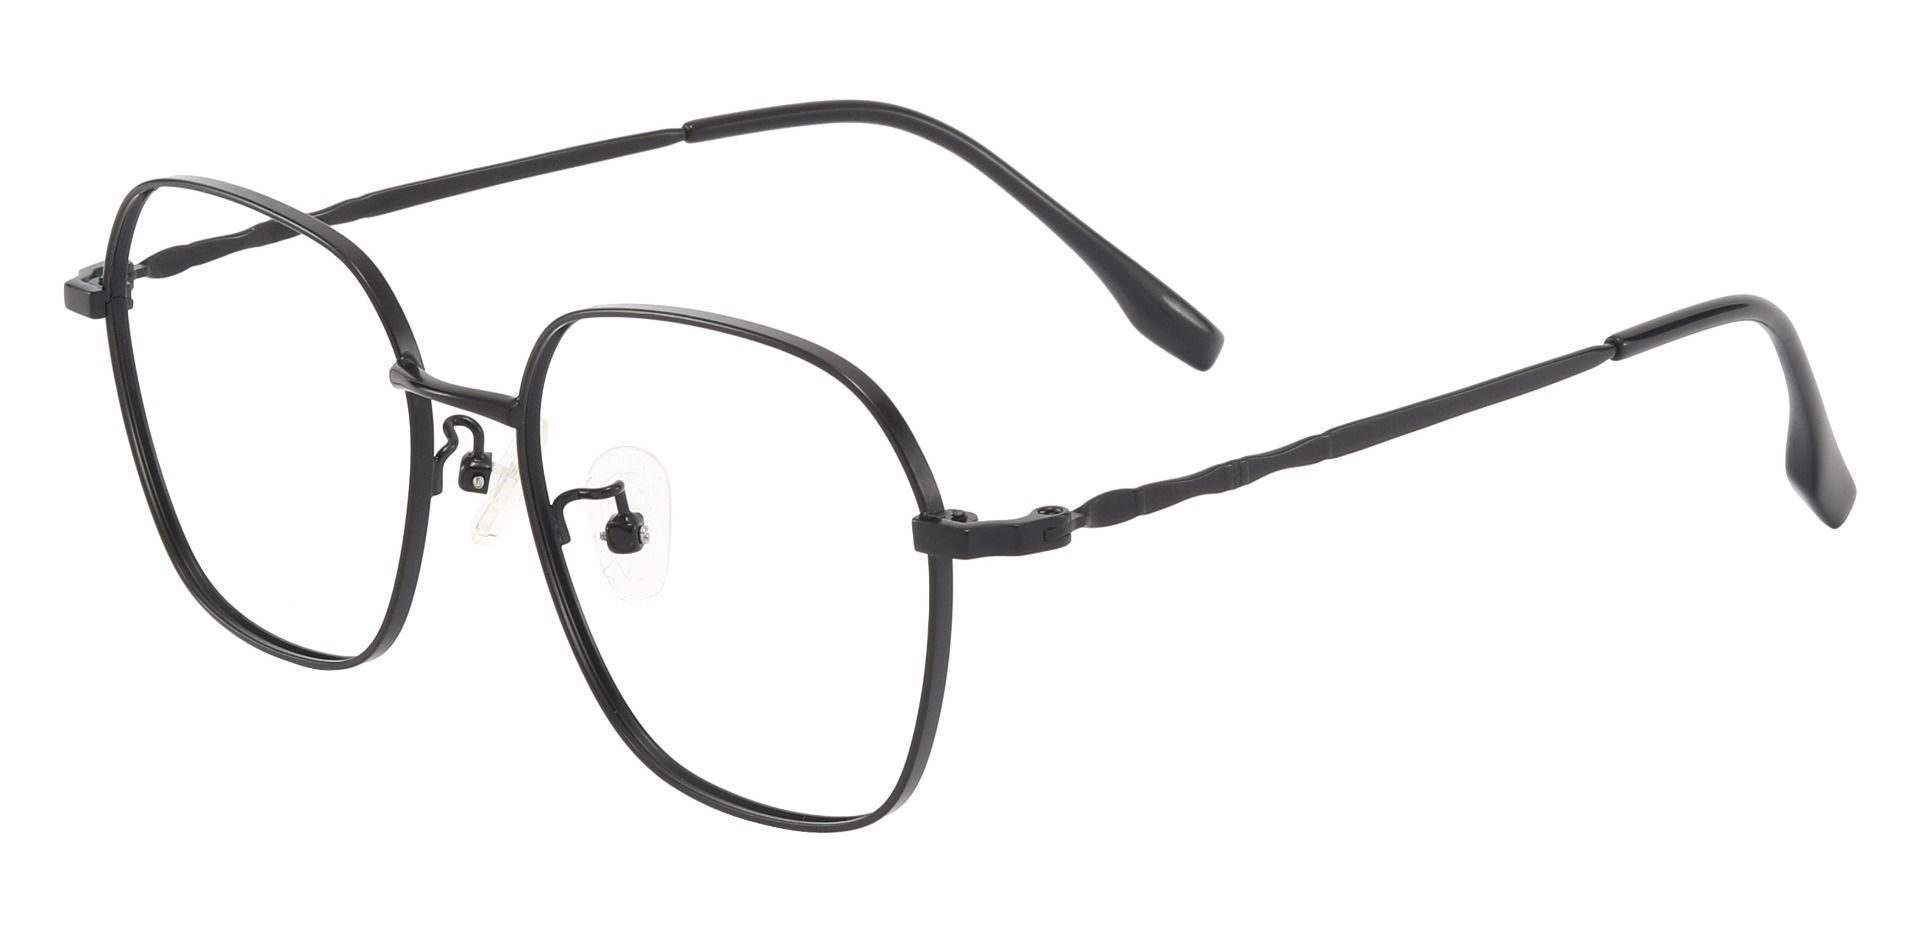 Crest Geometric Lined Bifocal Glasses - Black